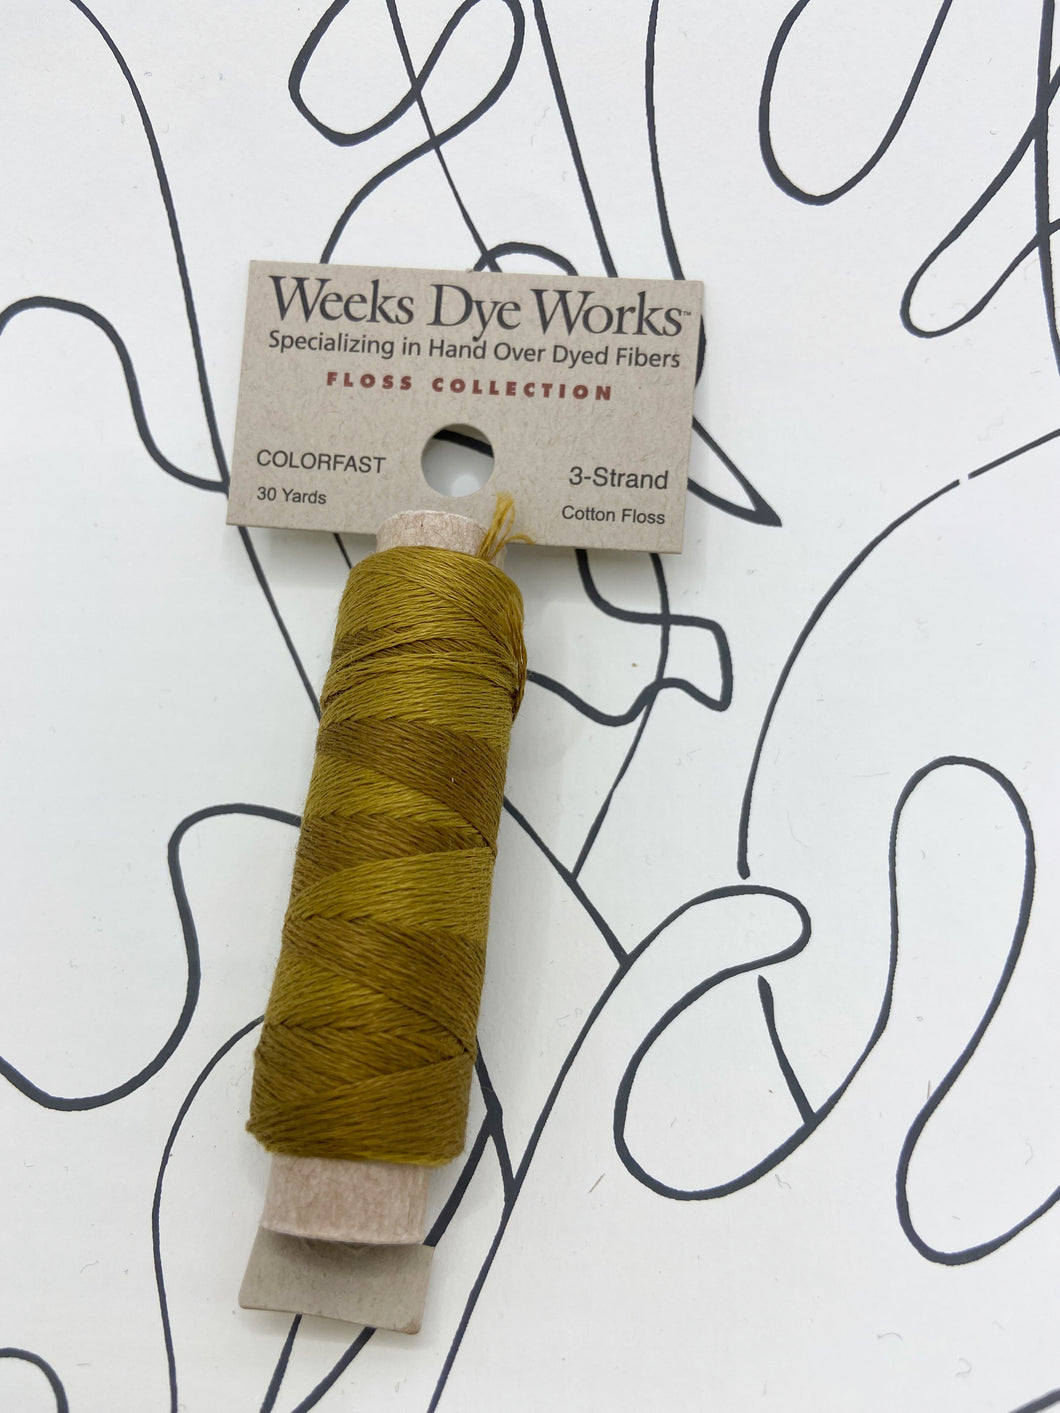 Schneckley (#1223) Weeks Dye Works 3-strand cotton floss